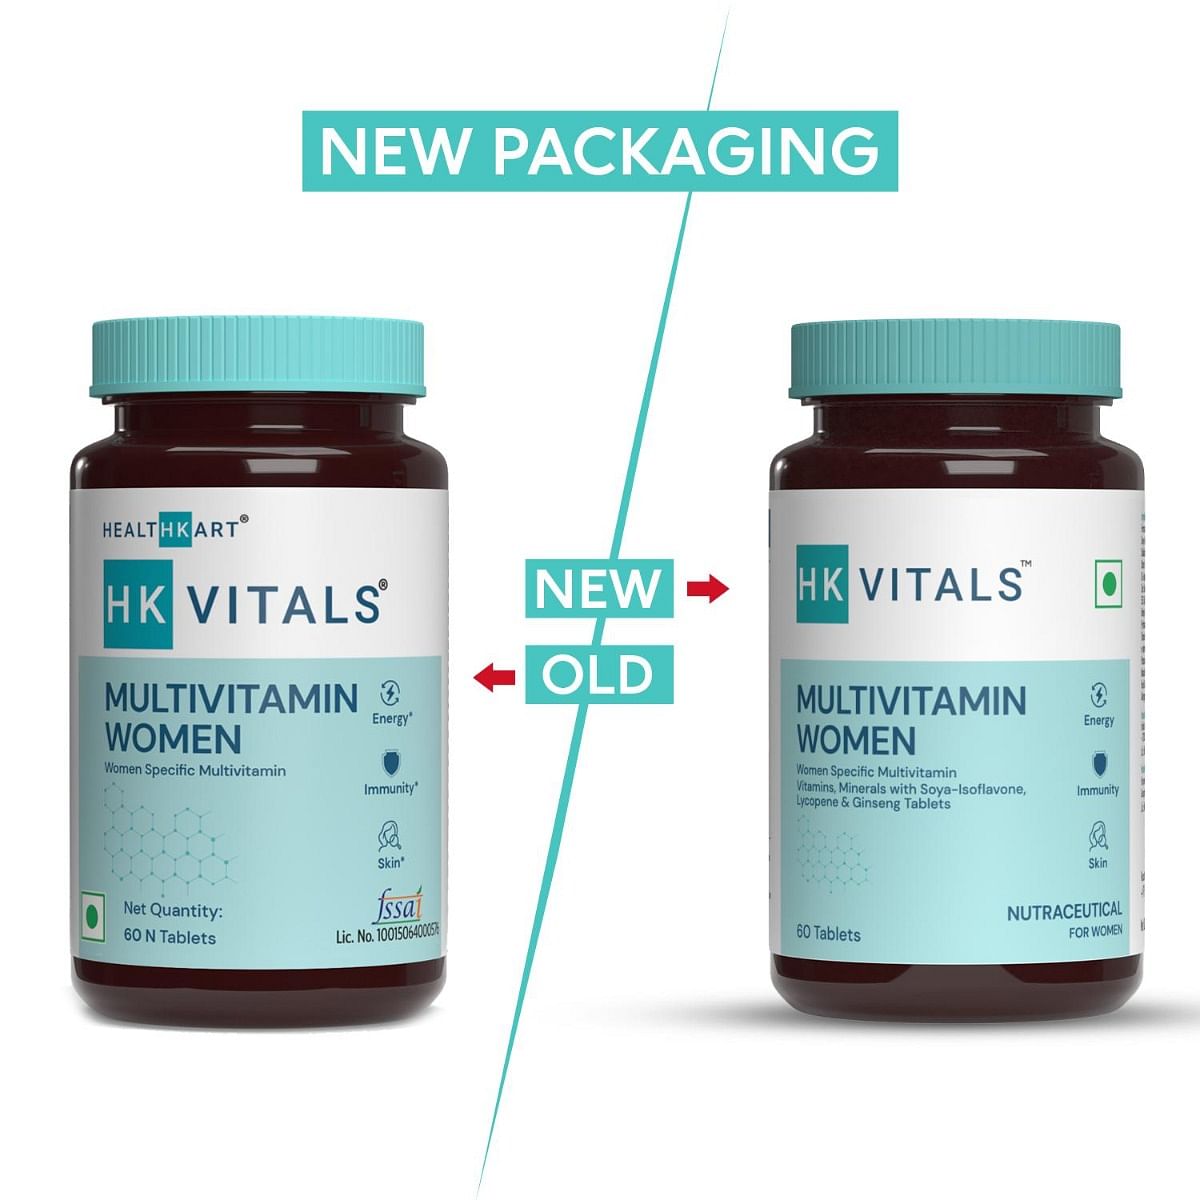 HealthKart HK Vitals Multivitamin for Women With Zinc Vitamin C Vitamin D Multiminerals  Ginseng Extract Boosts Energy Stamina  Skin Health